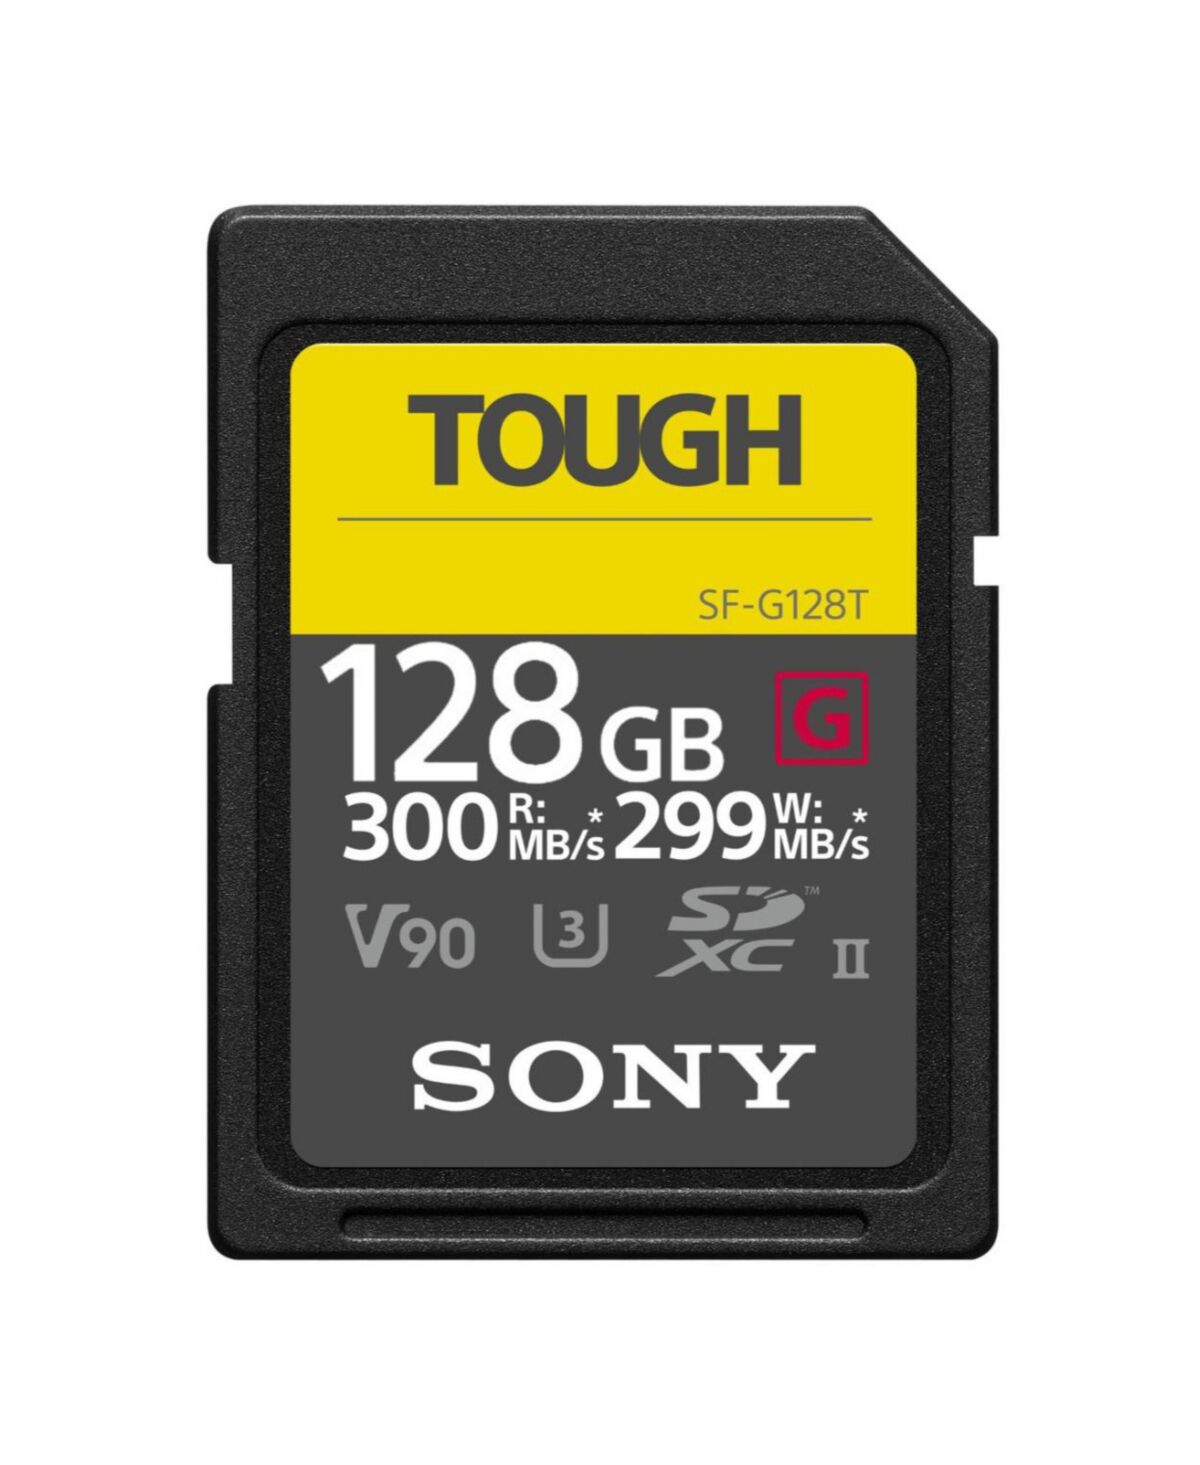 Sony 128Gb Uhs-Ii Tough G-Series Sd Card - Black